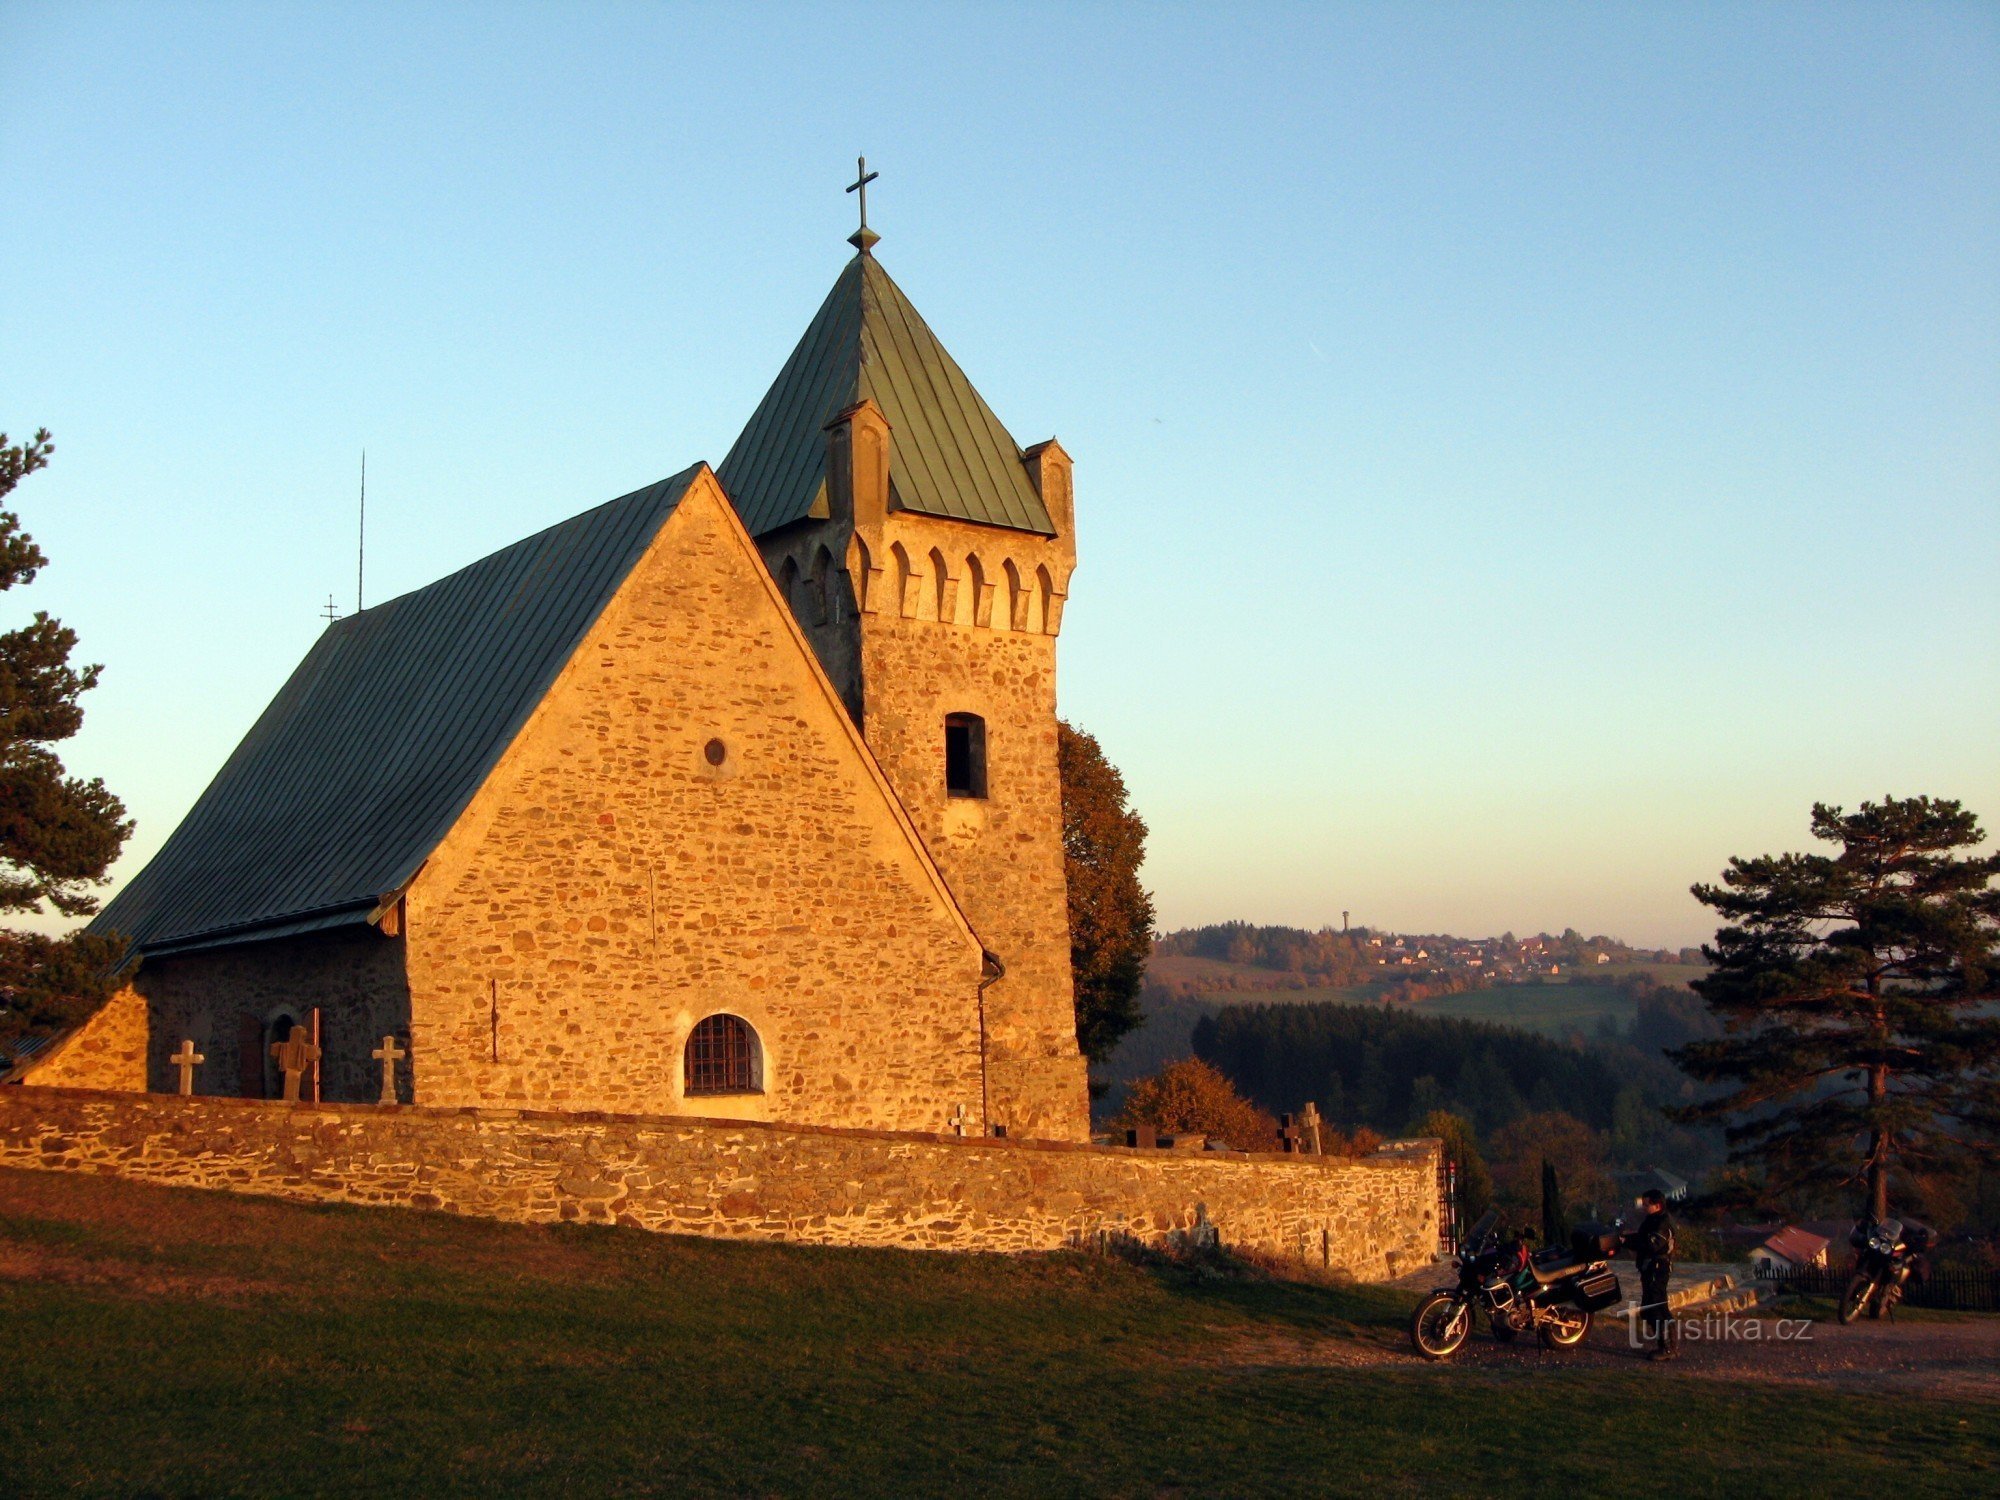 Karasín lookout tower in the background